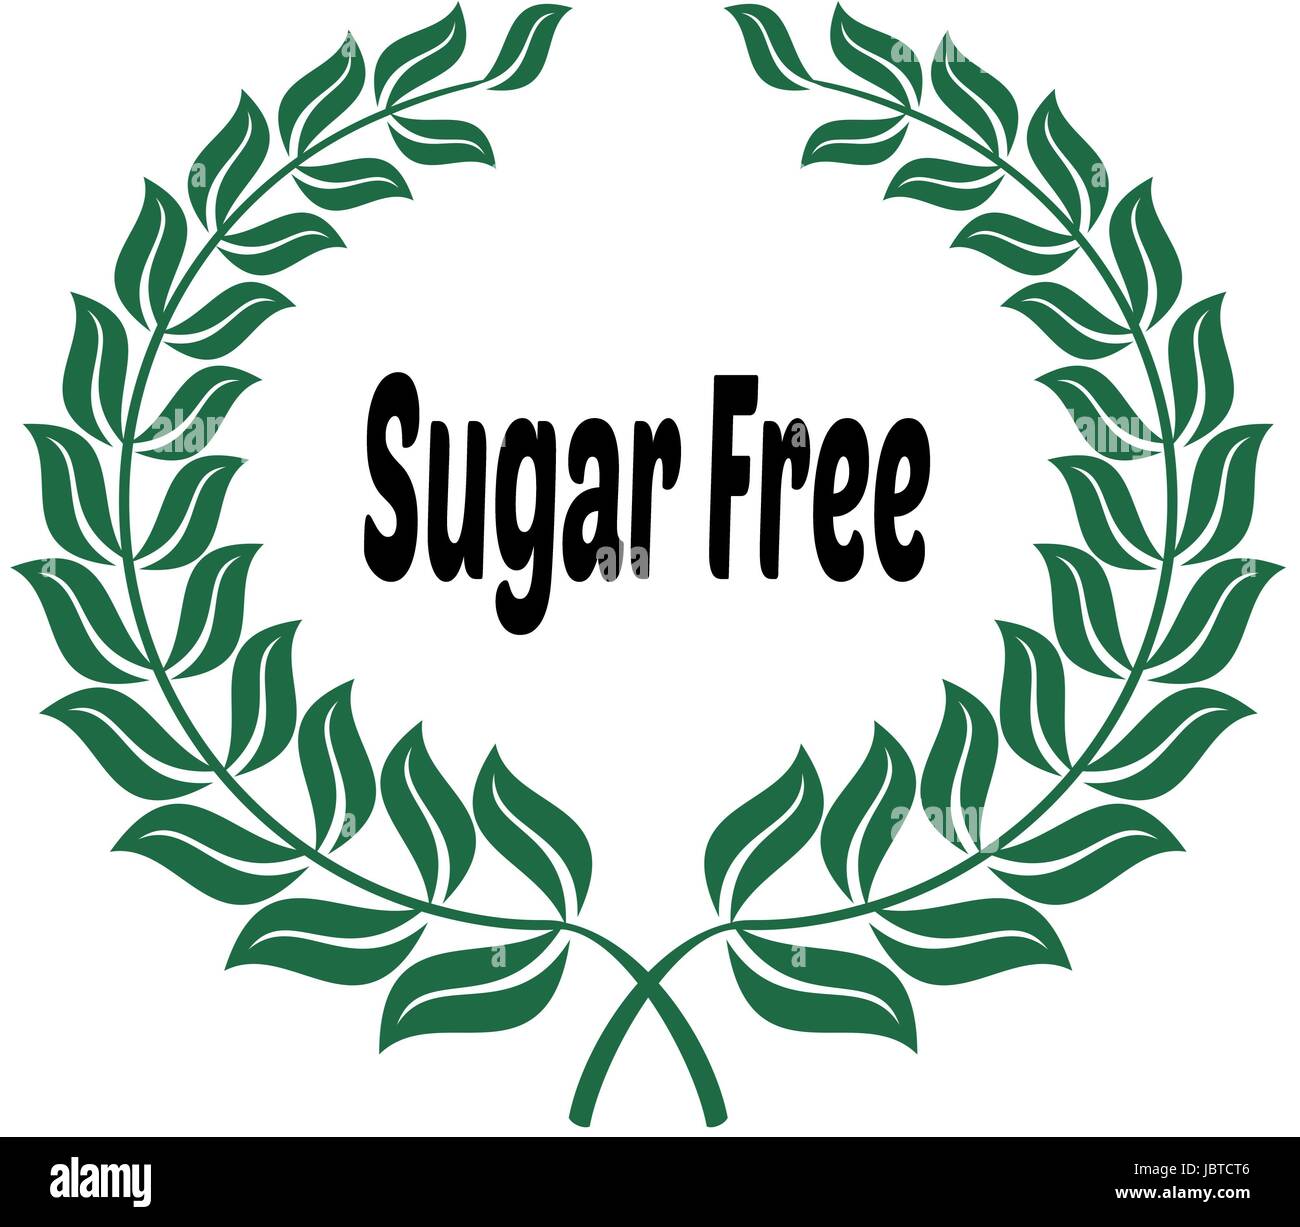 SUGAR FREE on green laurels sticker label. Illustration image Stock Photo